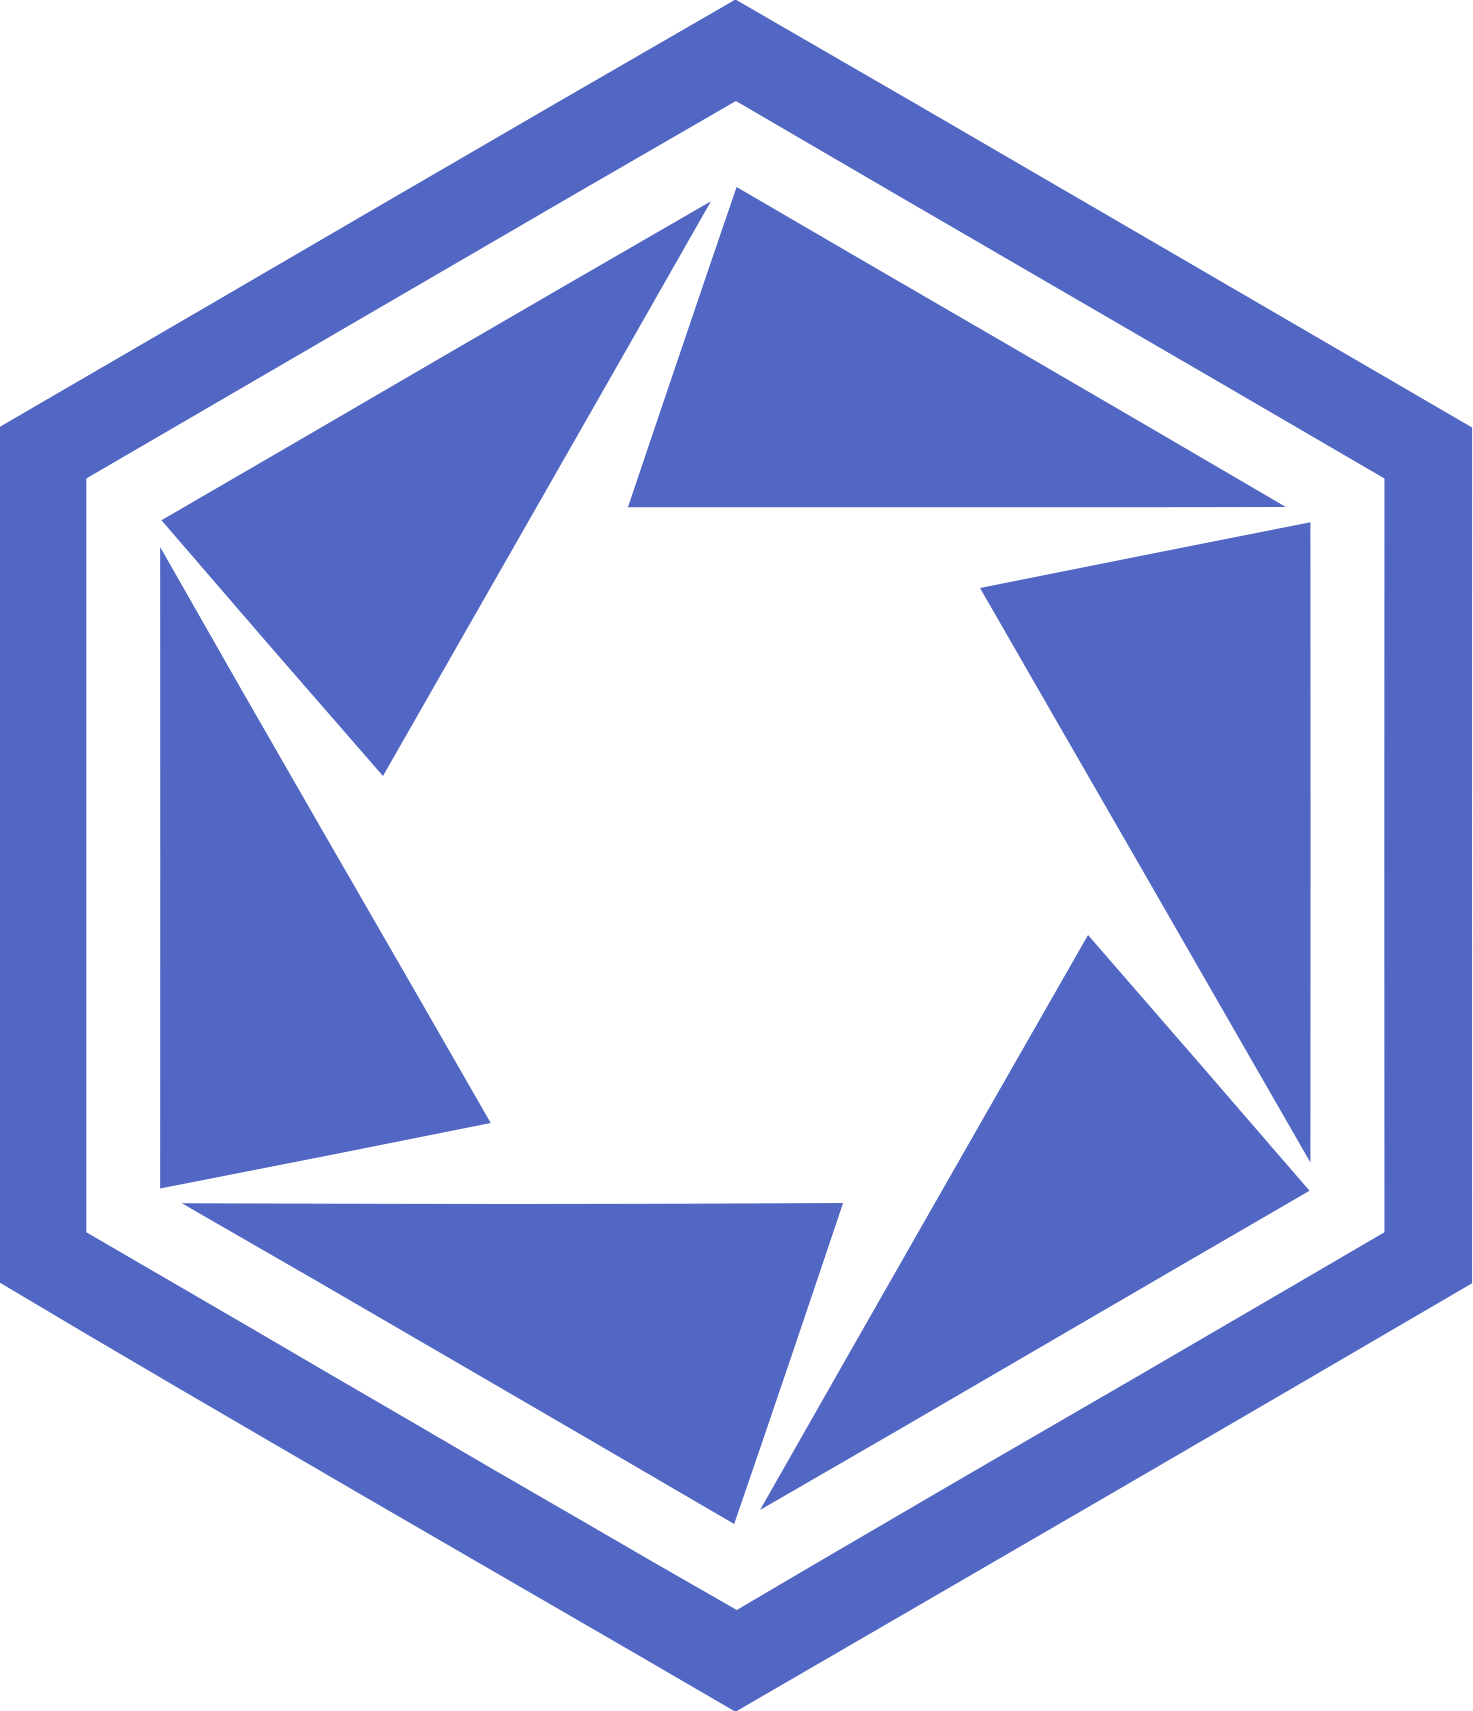 MeiraGTx logo (transparent PNG)